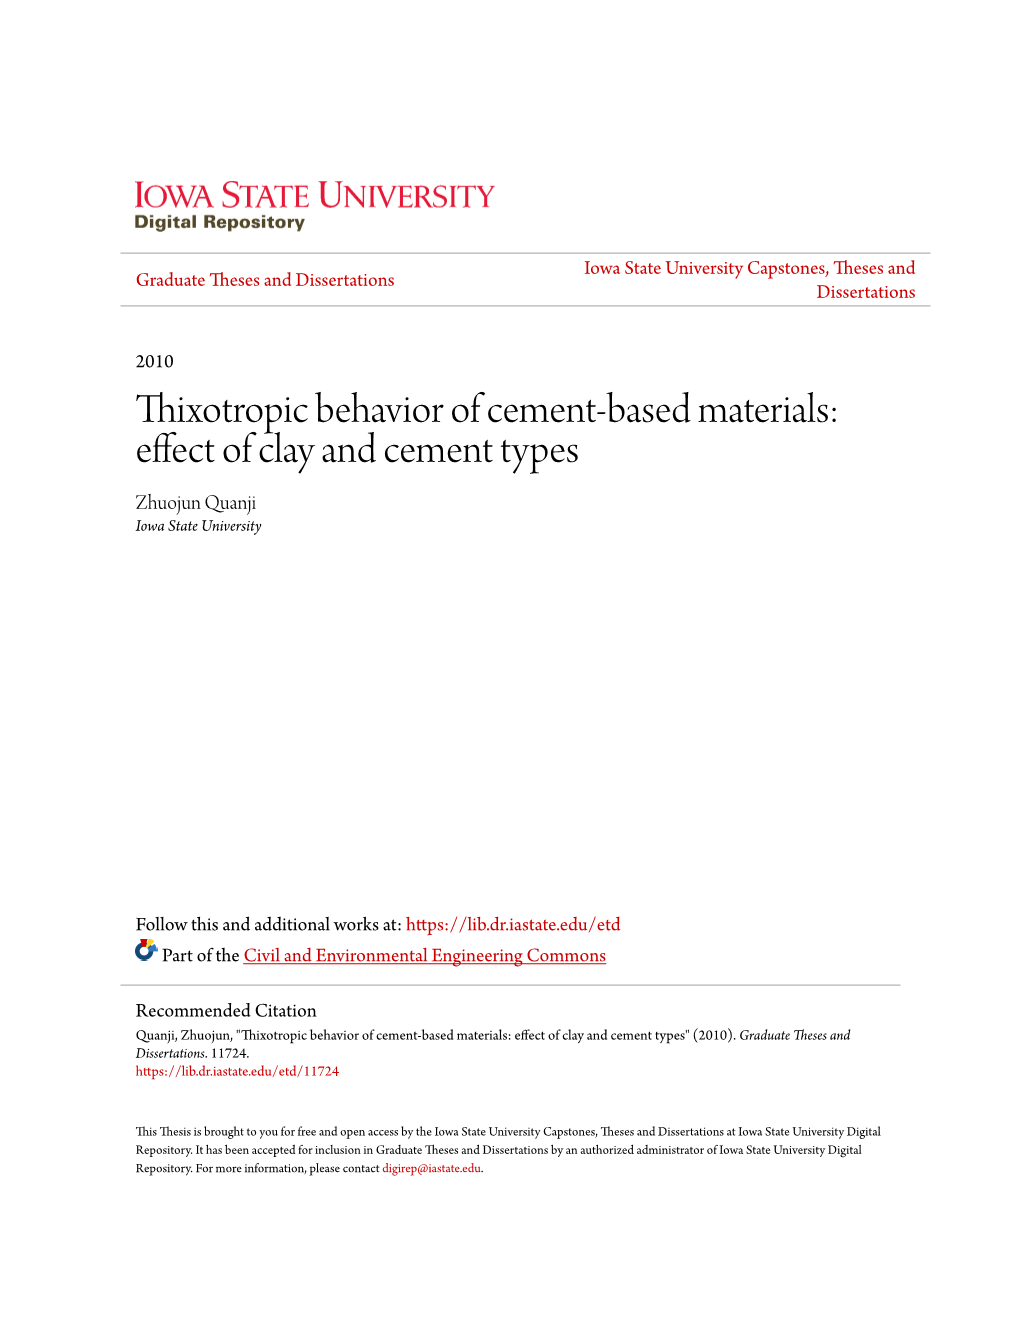 Thixotropic Behavior of Cement-Based Materials: Effect of Clay and Cement Types Zhuojun Quanji Iowa State University